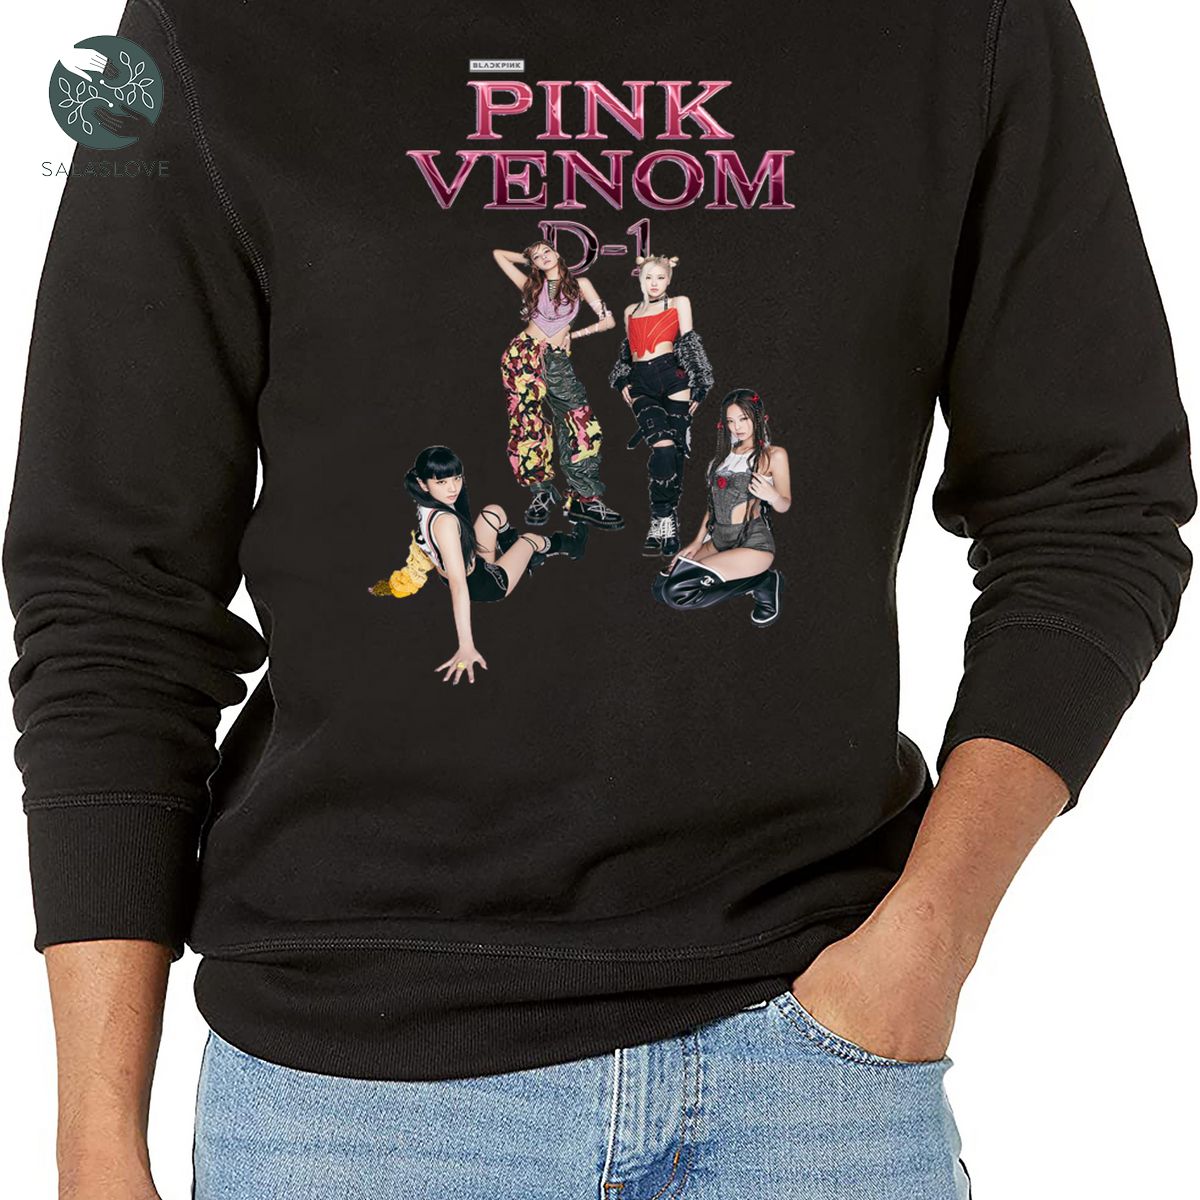 Blackpink Pink Venom New MV Shirt